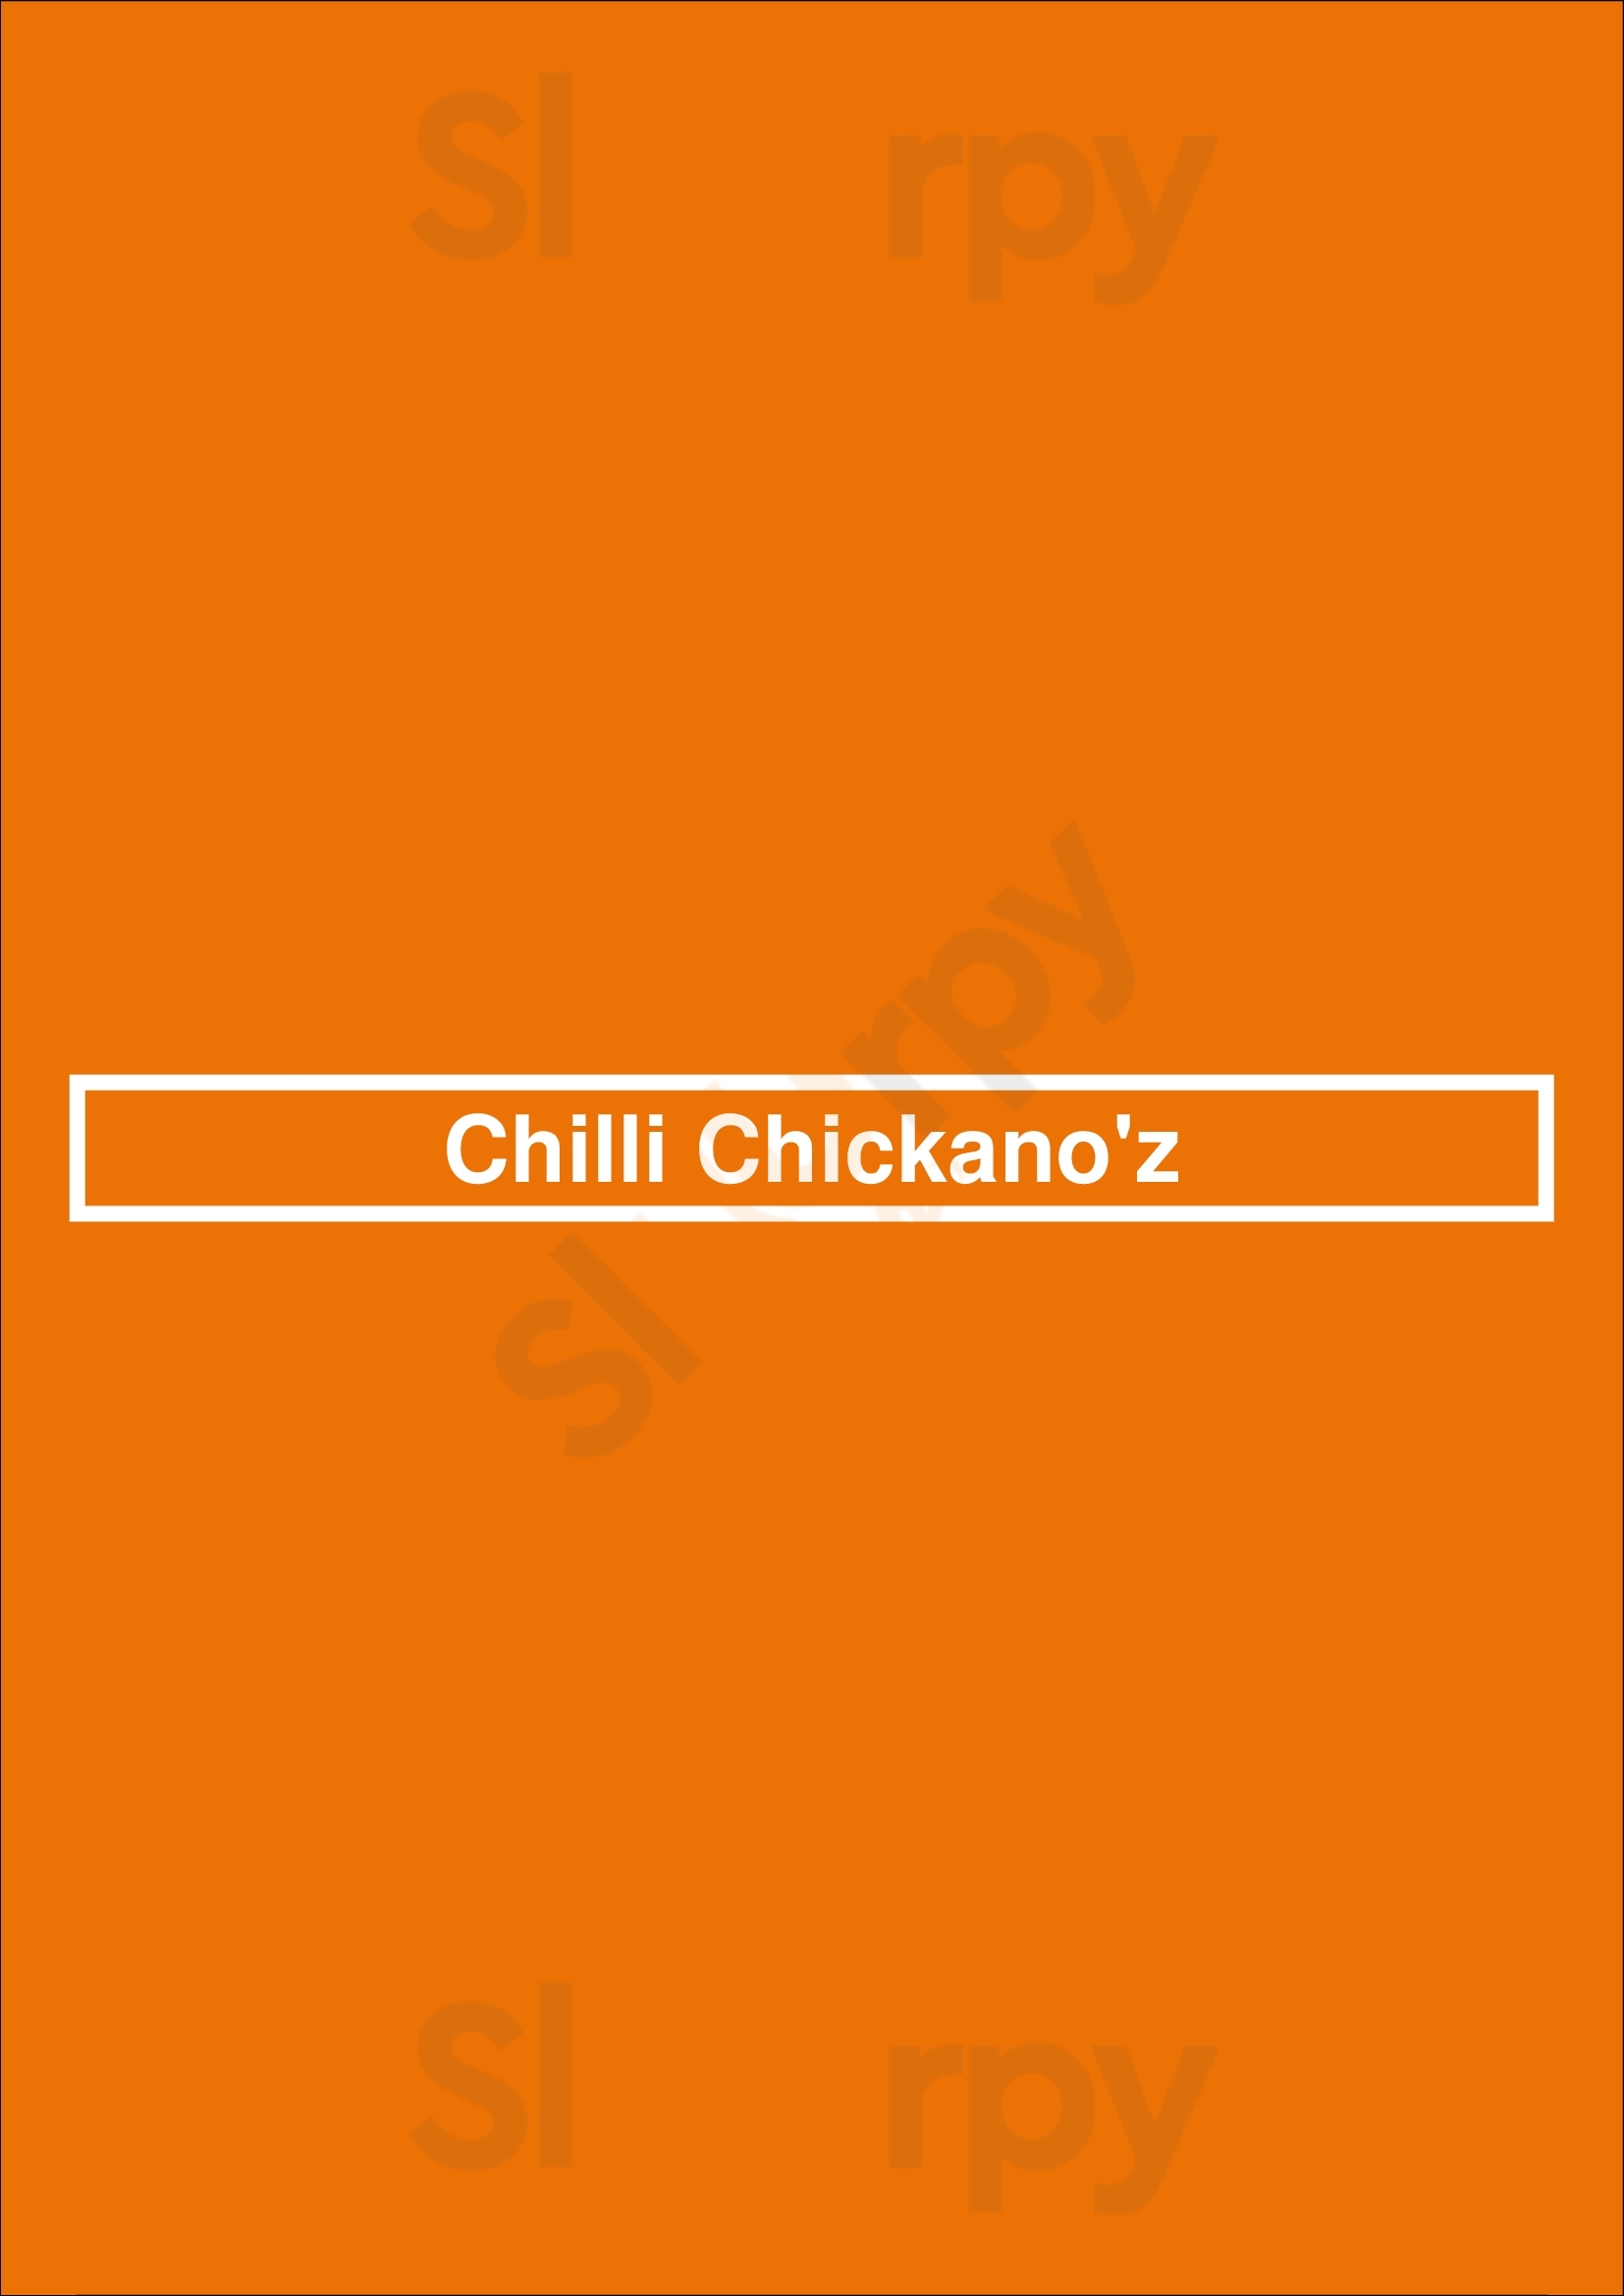 Chilli Chickano'z Rotherham Menu - 1